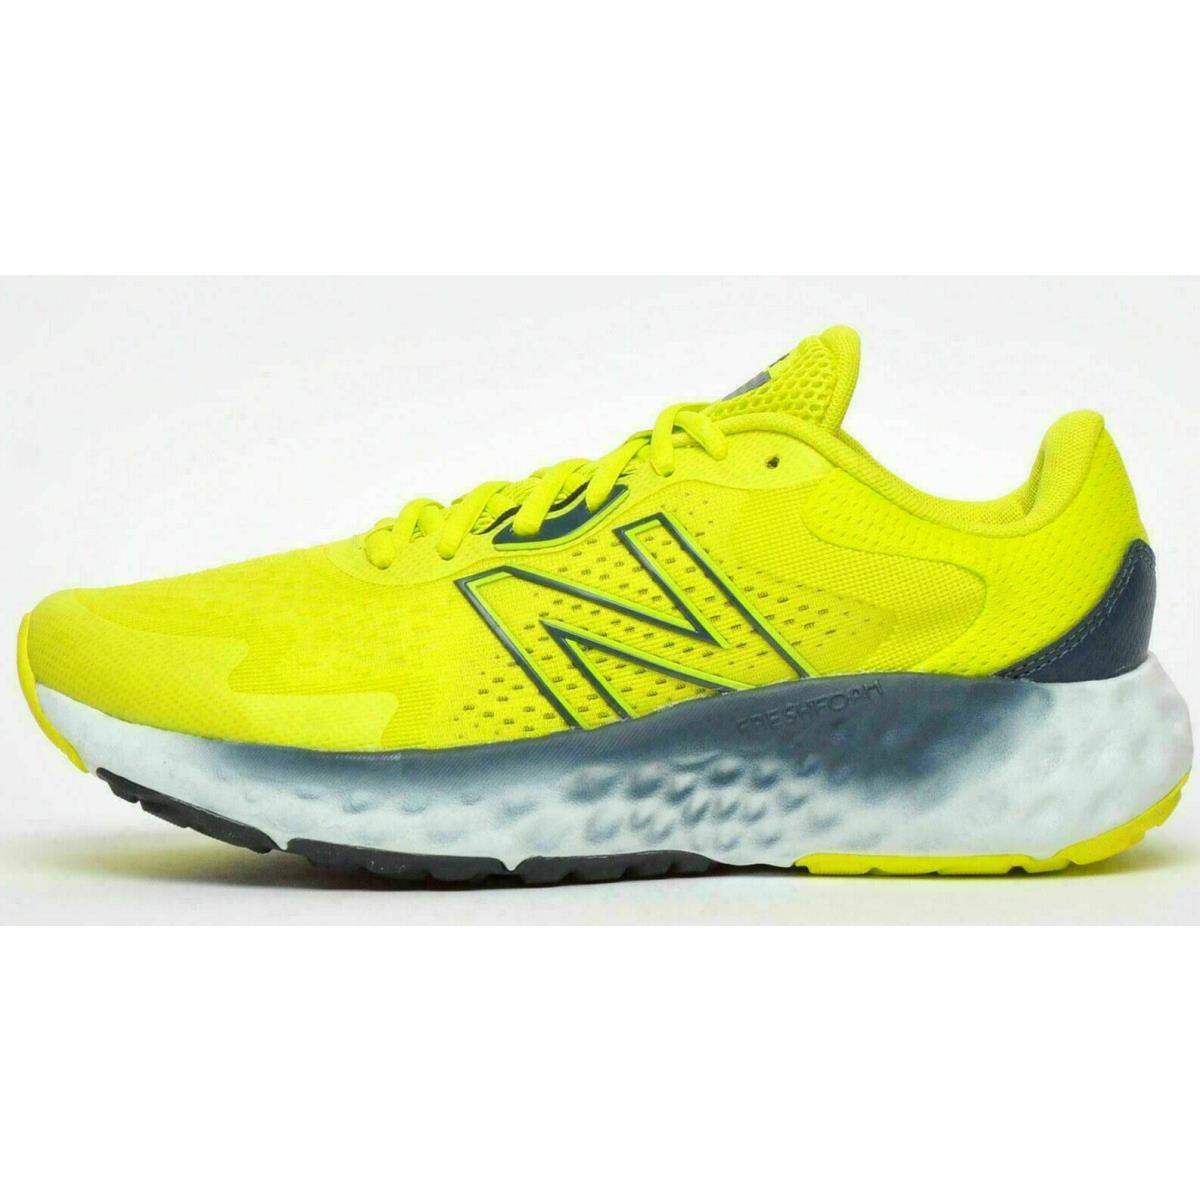 Balance Fresh Foam Evoz Men`s Running Shoes Size 10.5 11 14 Yellow US Size 11 Color Yellow